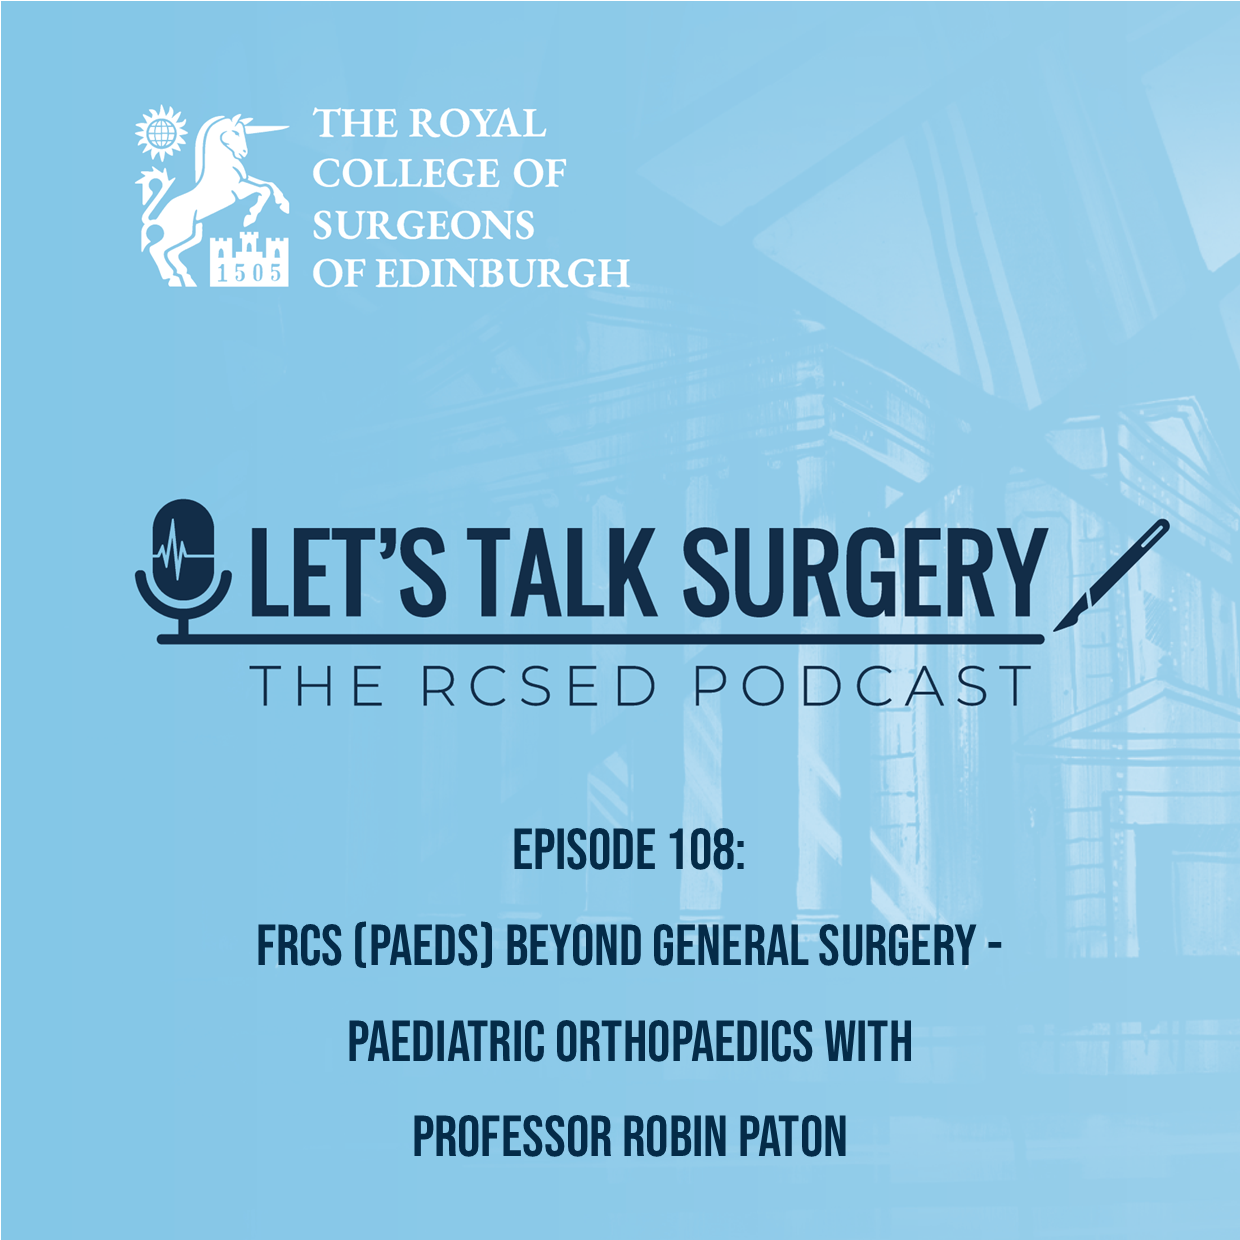 FRCS (Paeds) Beyond General Surgery - Paediatric Orthopaedics with Professor Robin Paton